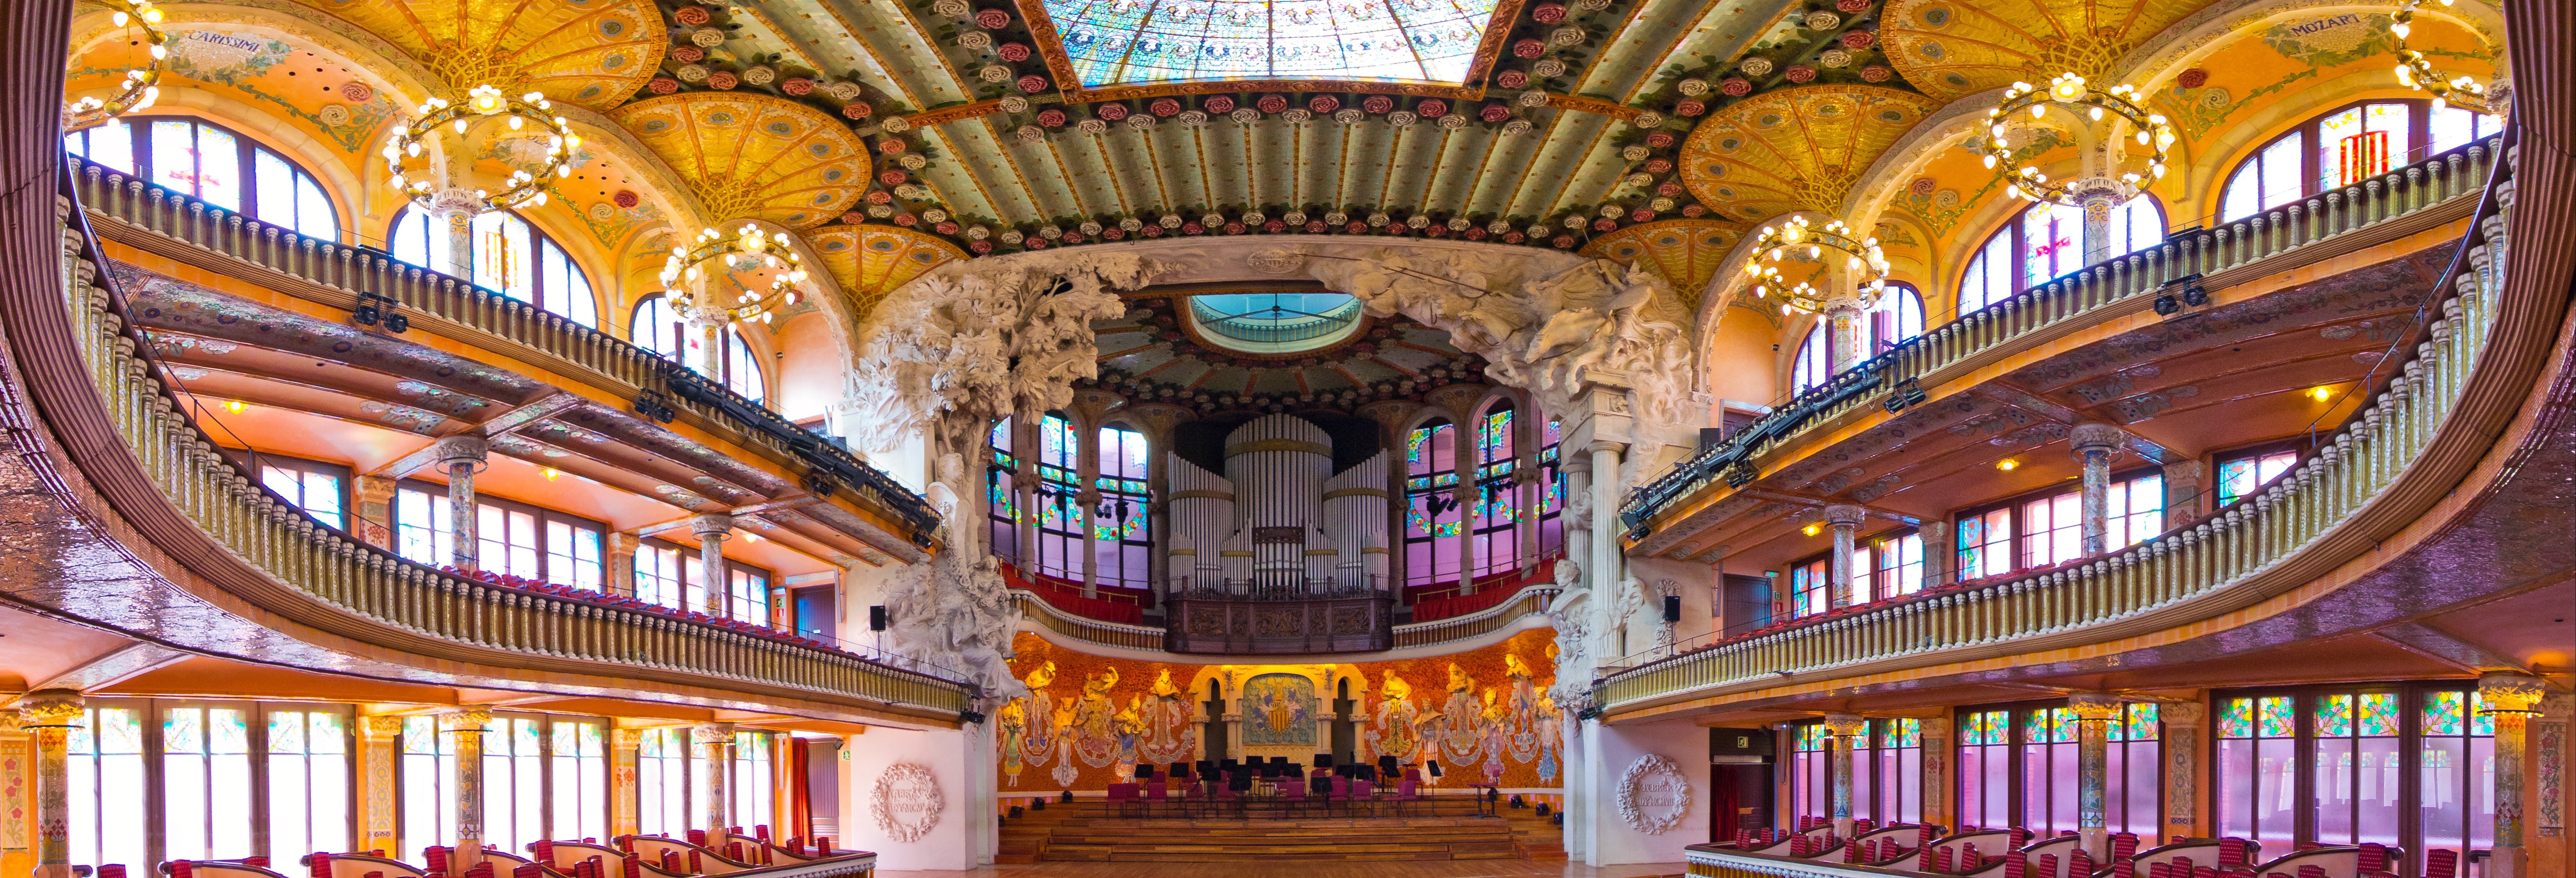 Palau de la Música Catalana Tour